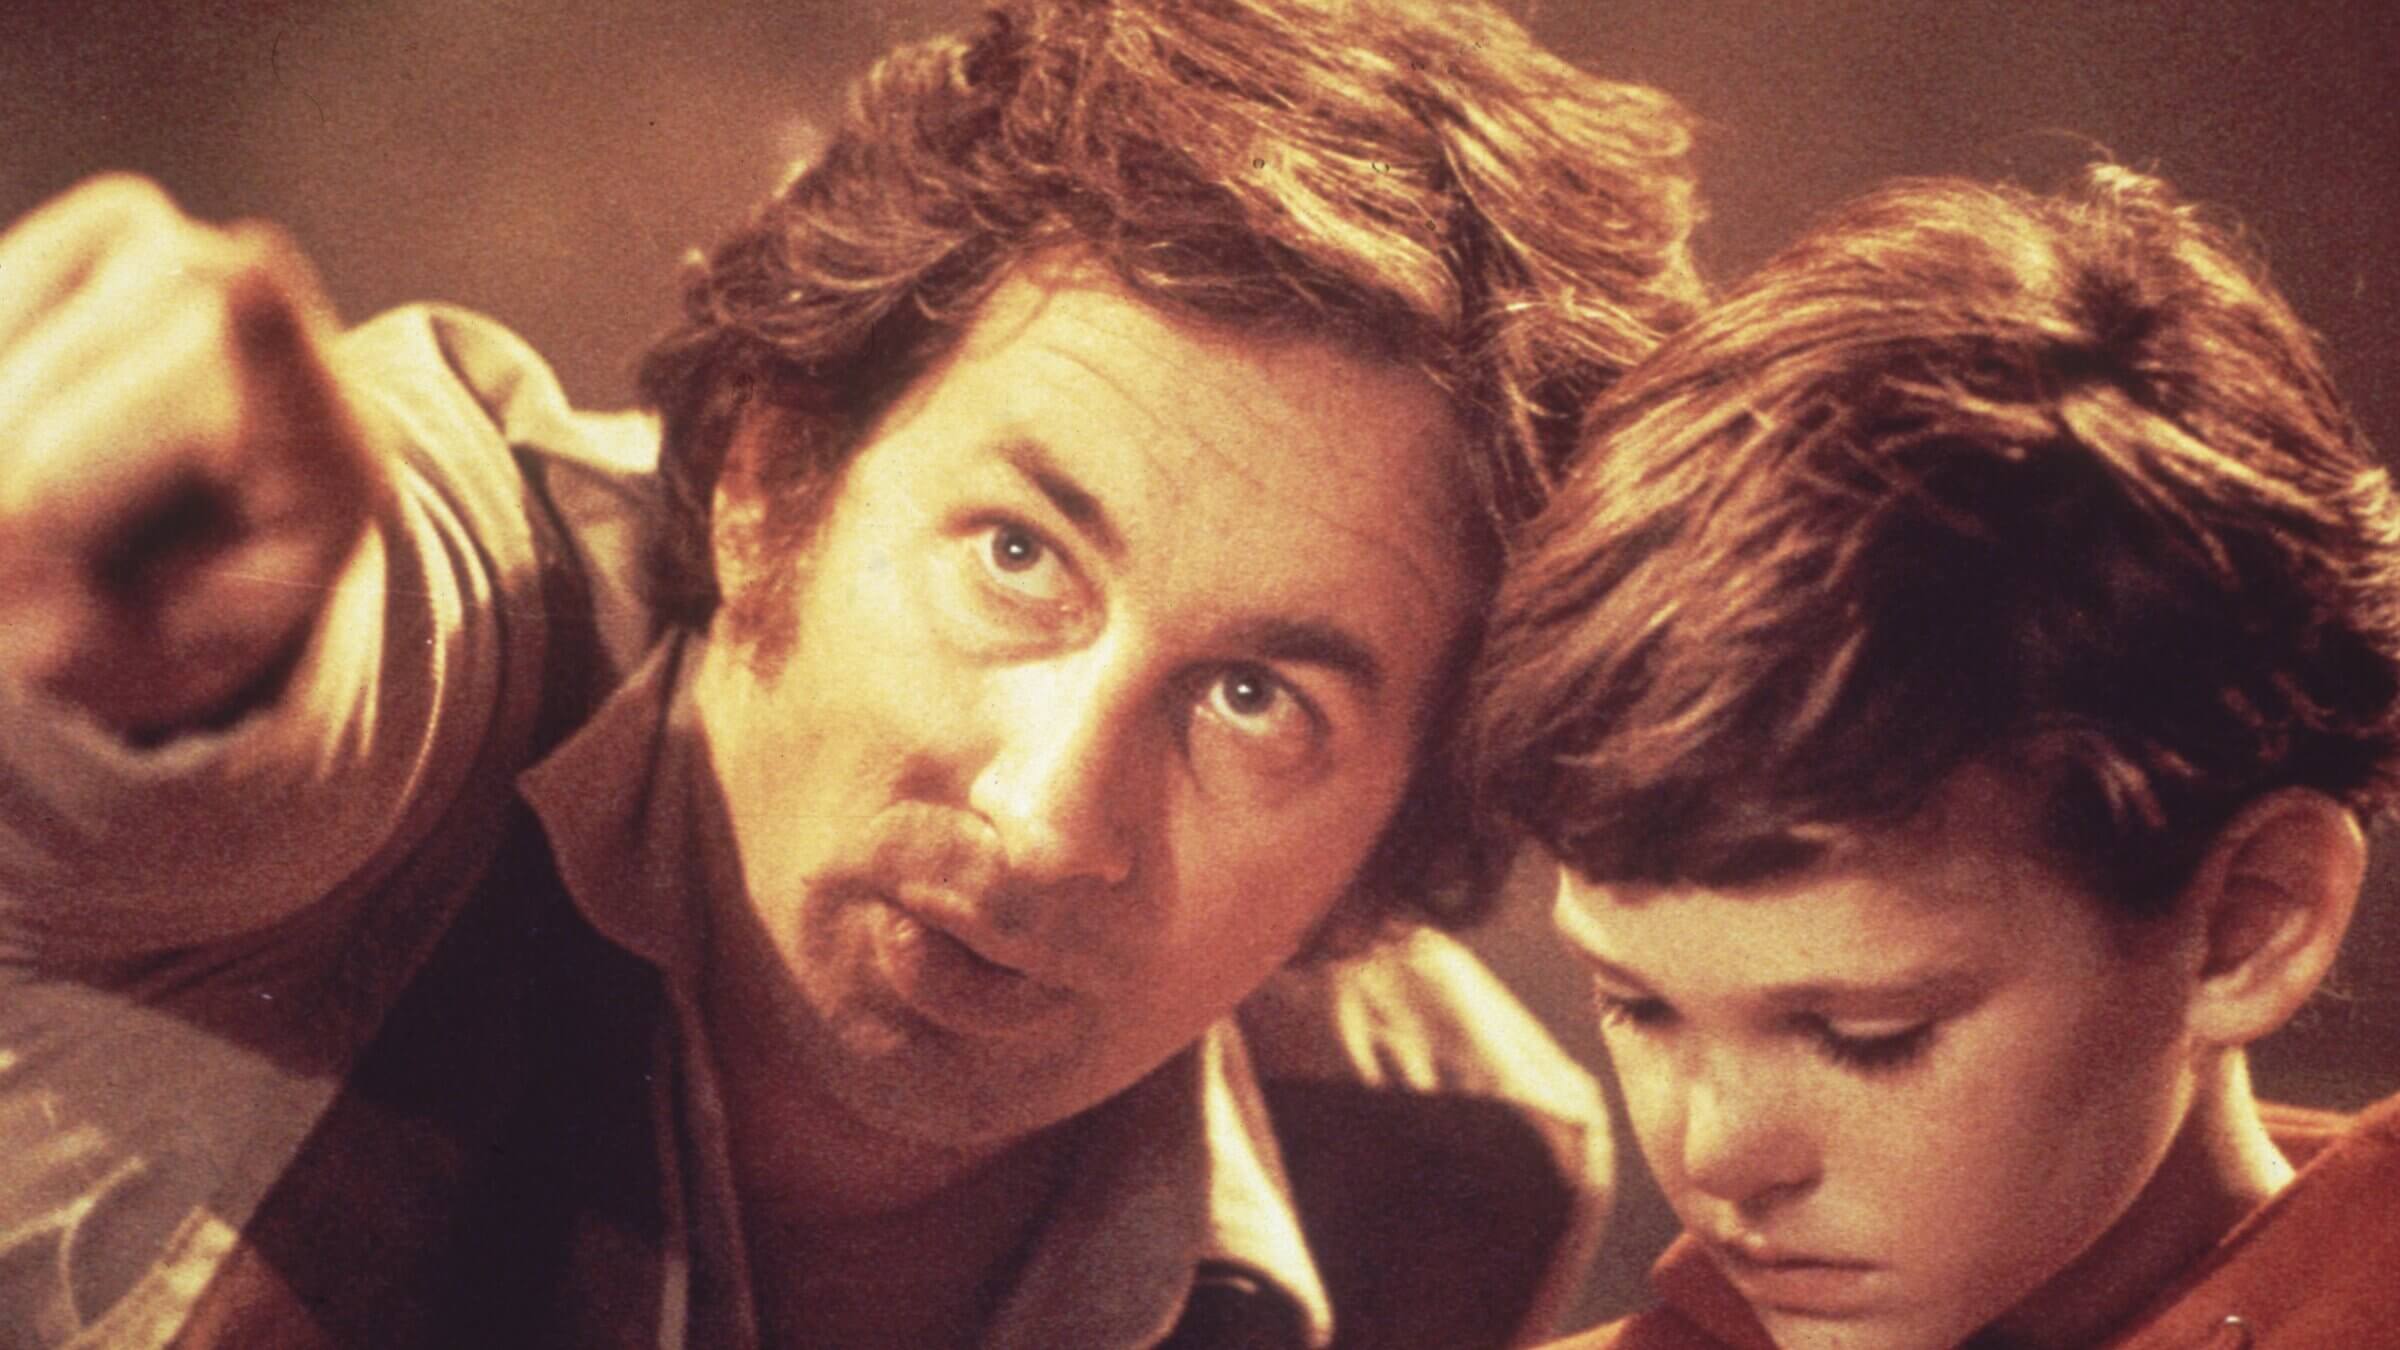 Steven Spielberg directs Henry Thomas in "E.T."